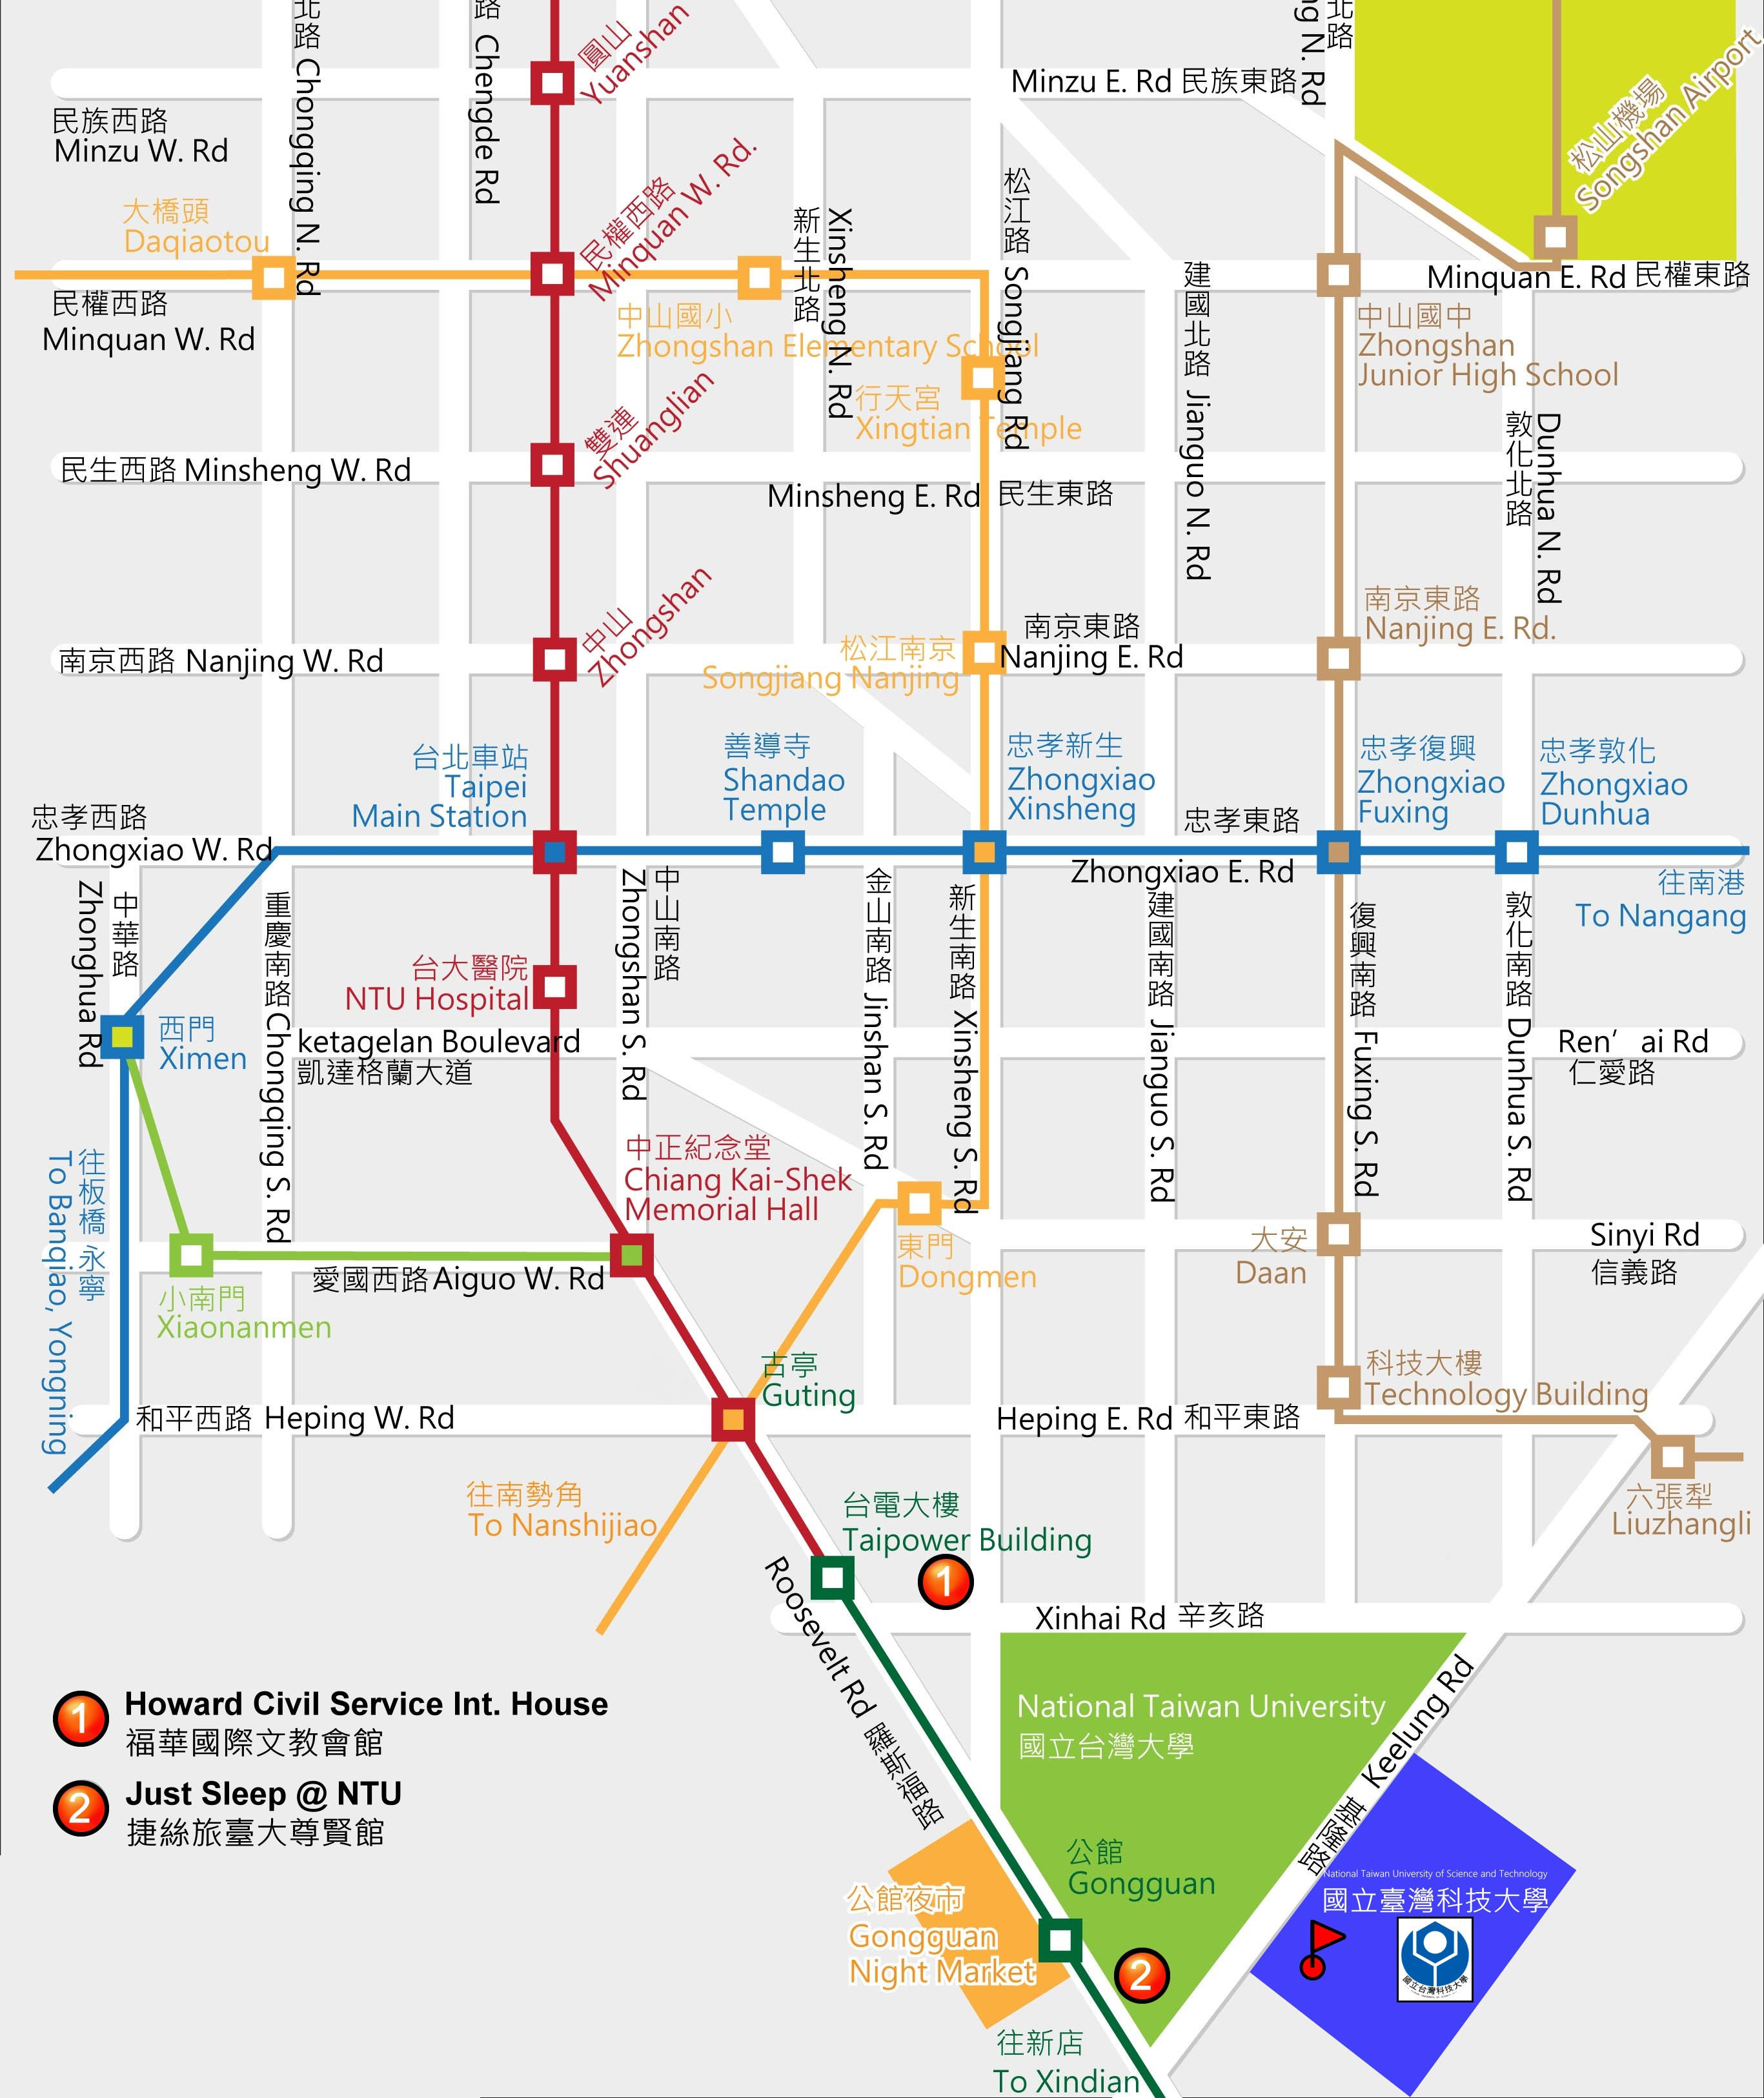 Map: Taipei, Hotel, Taiwan Tech University (NTUST)